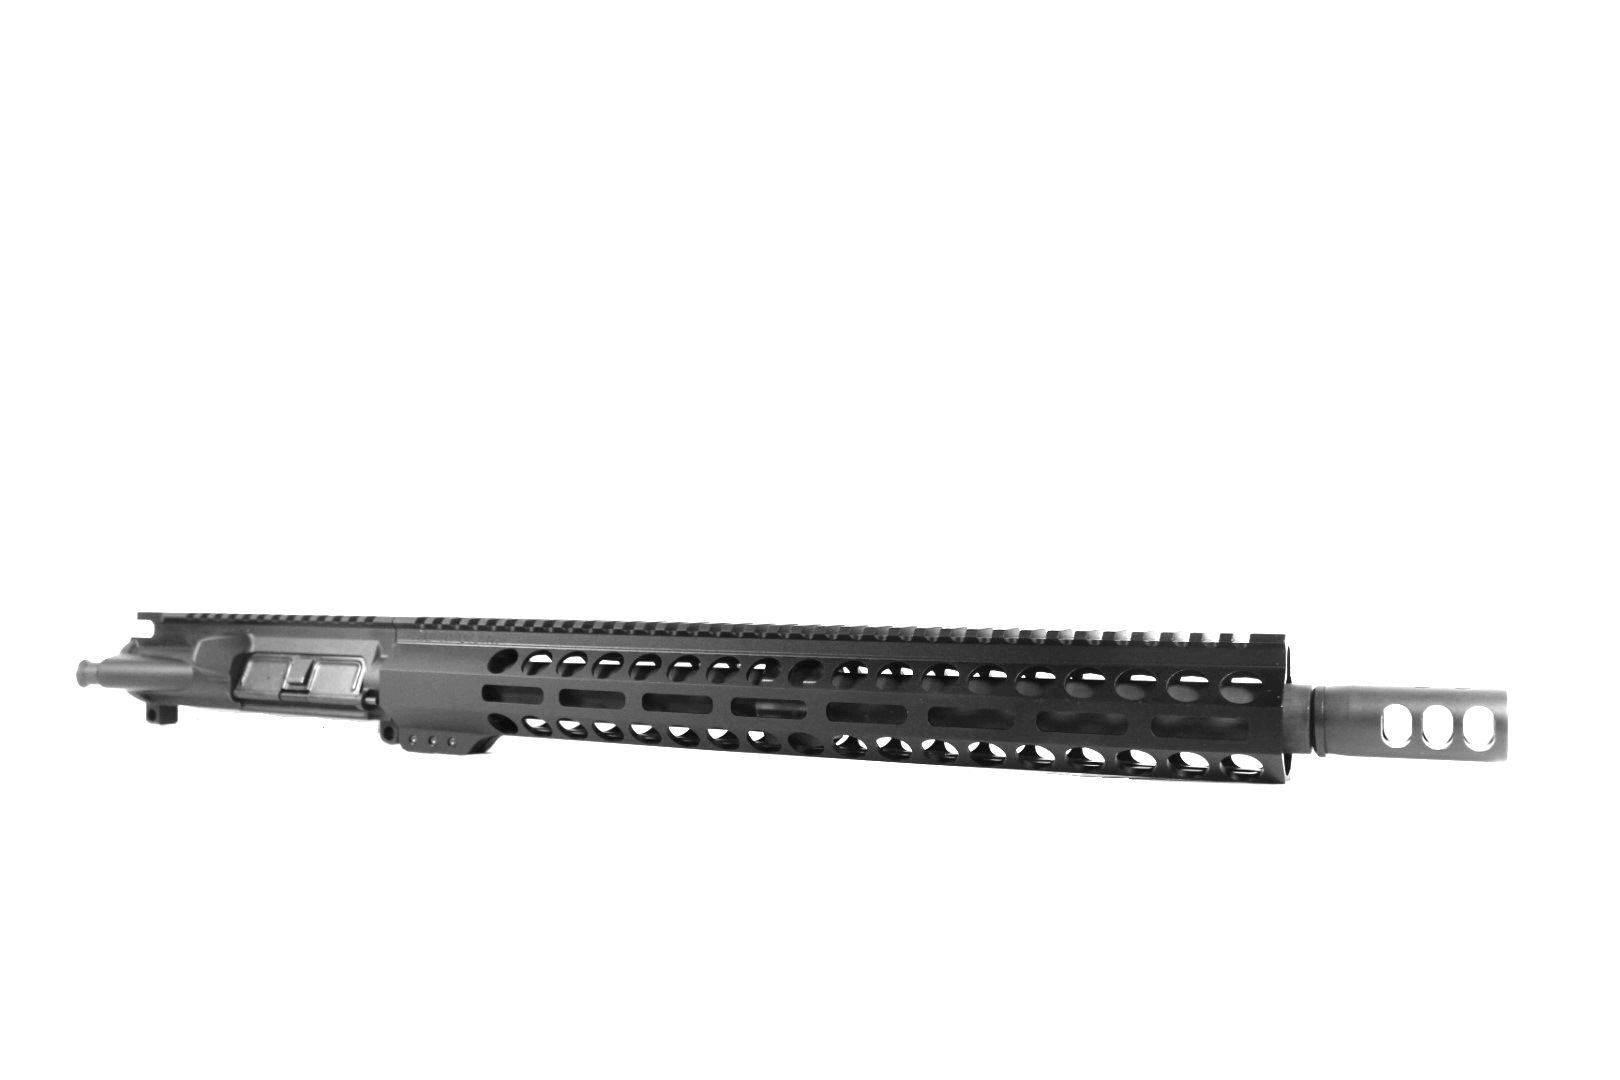 16 inch AR-15 AR15 12.7x42 (50 Beowulf) Keymod M-LOK Upper